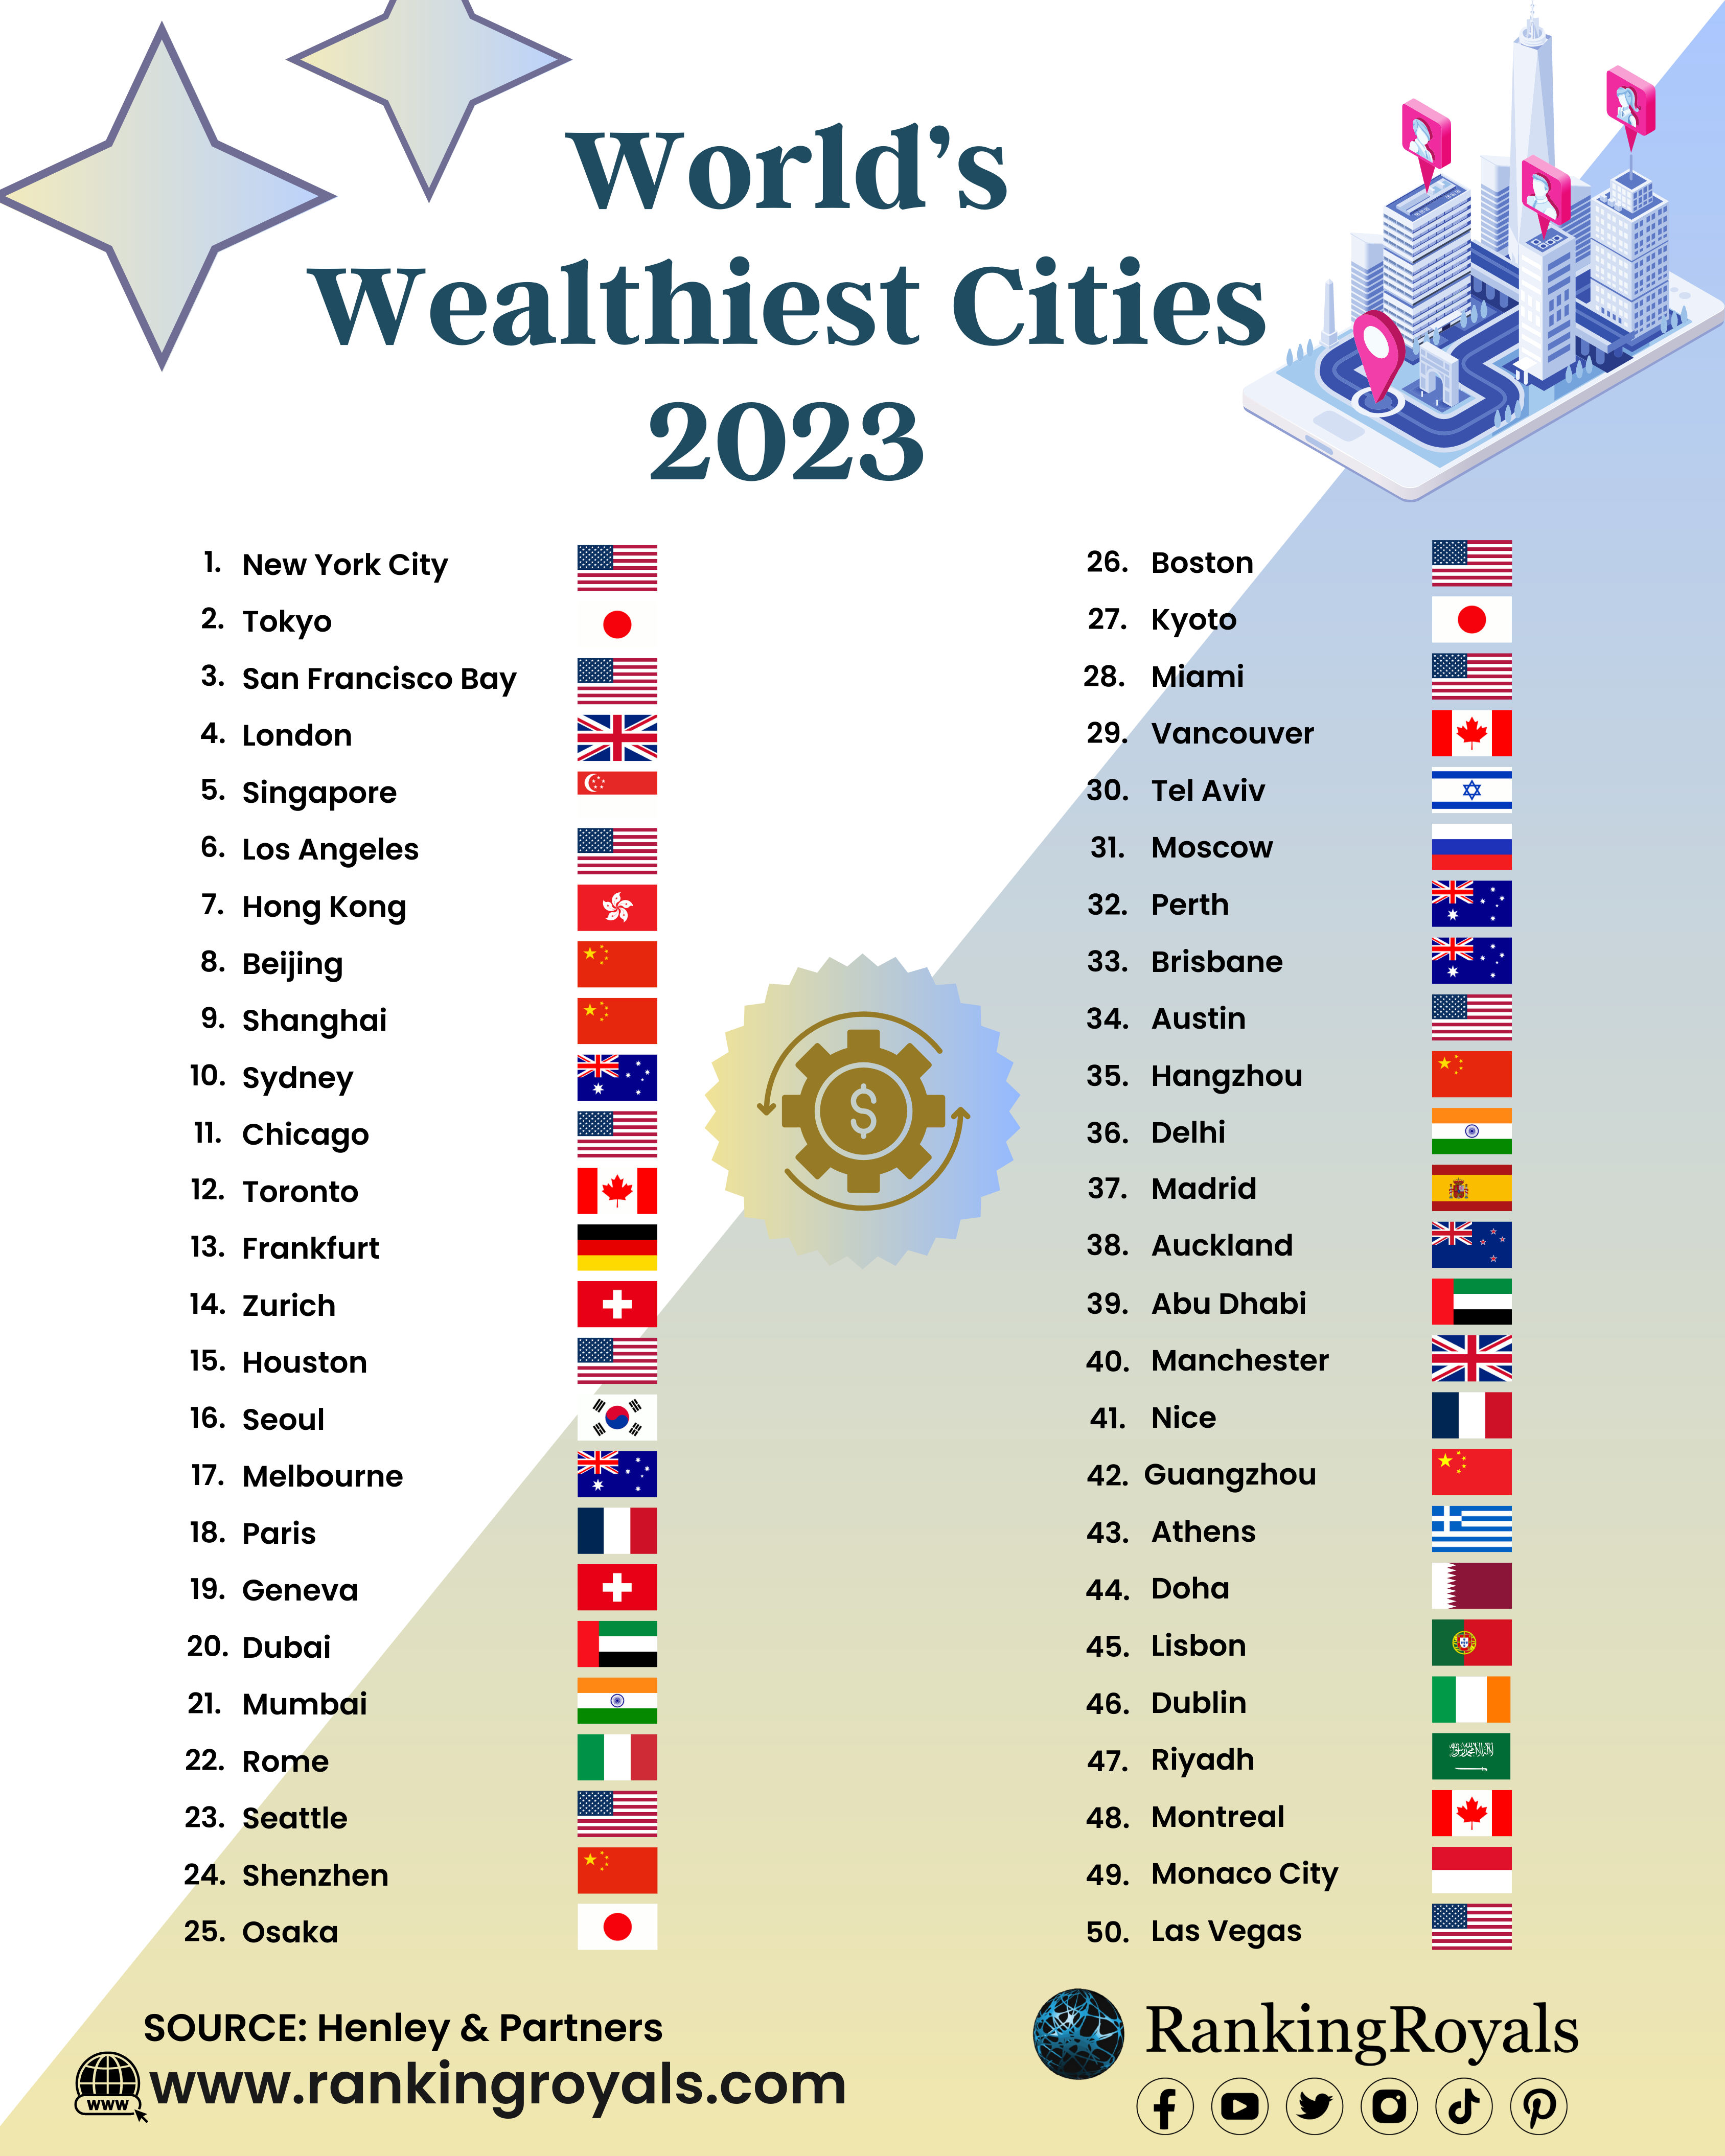 Top 10 Wealthiest Cities in the World 2023